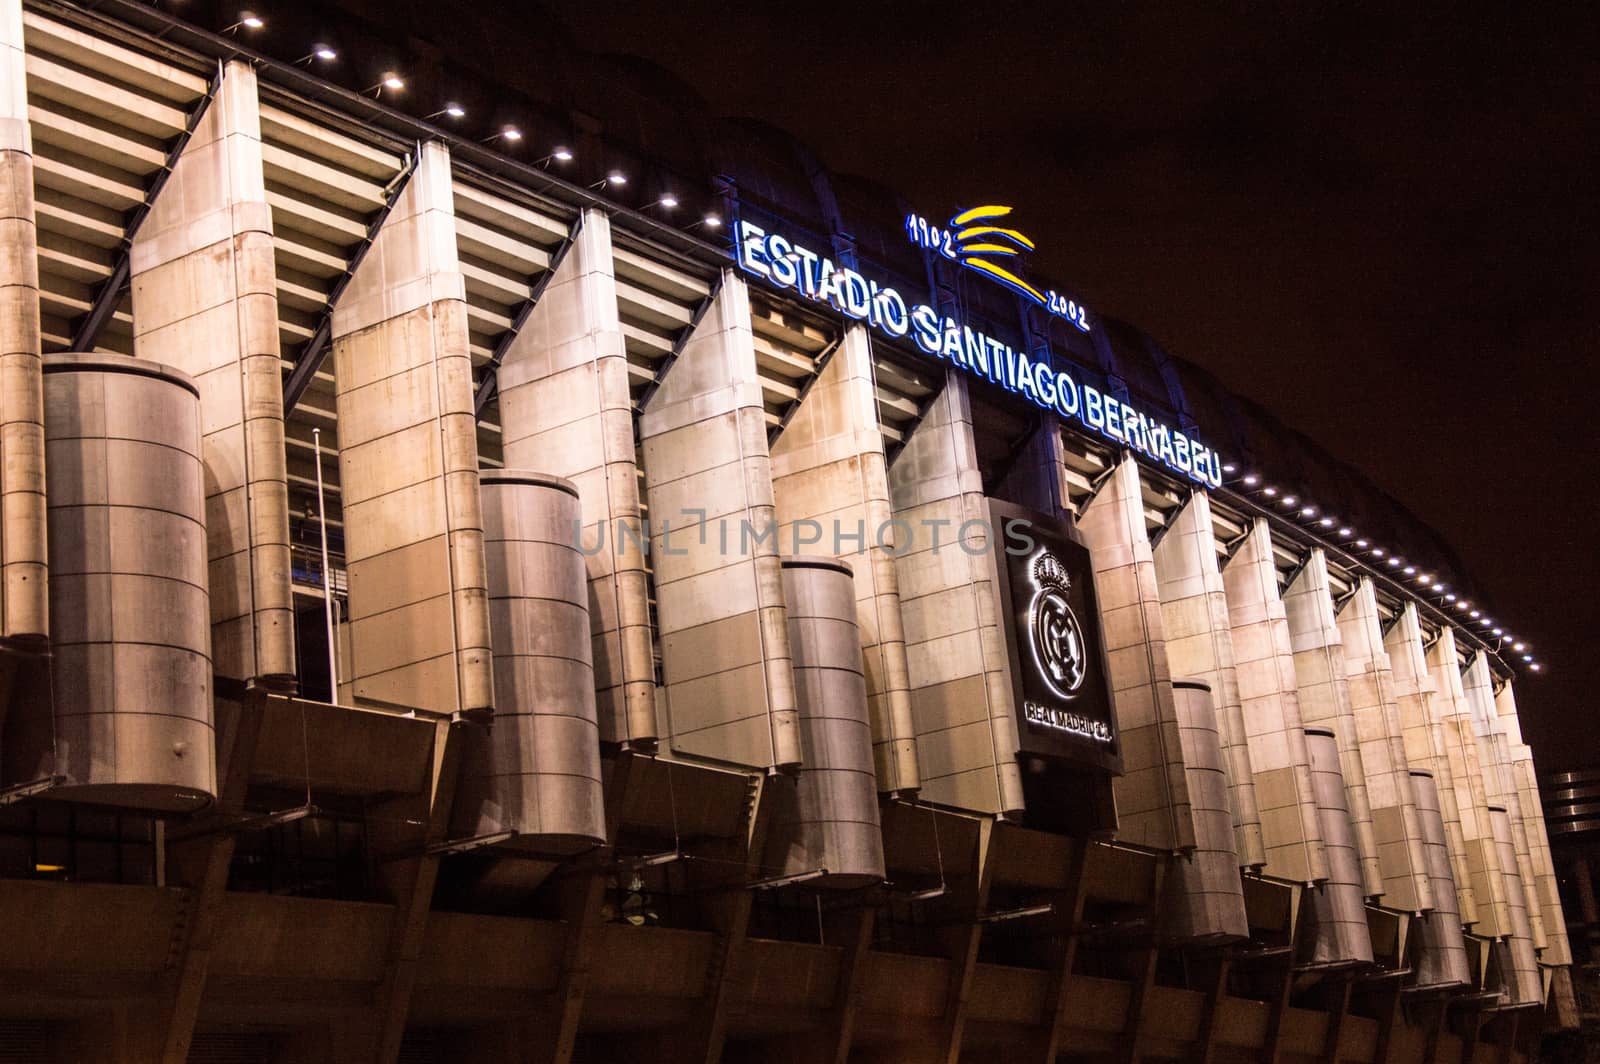 Santiago Bernabeu Stadium Madrid in the night